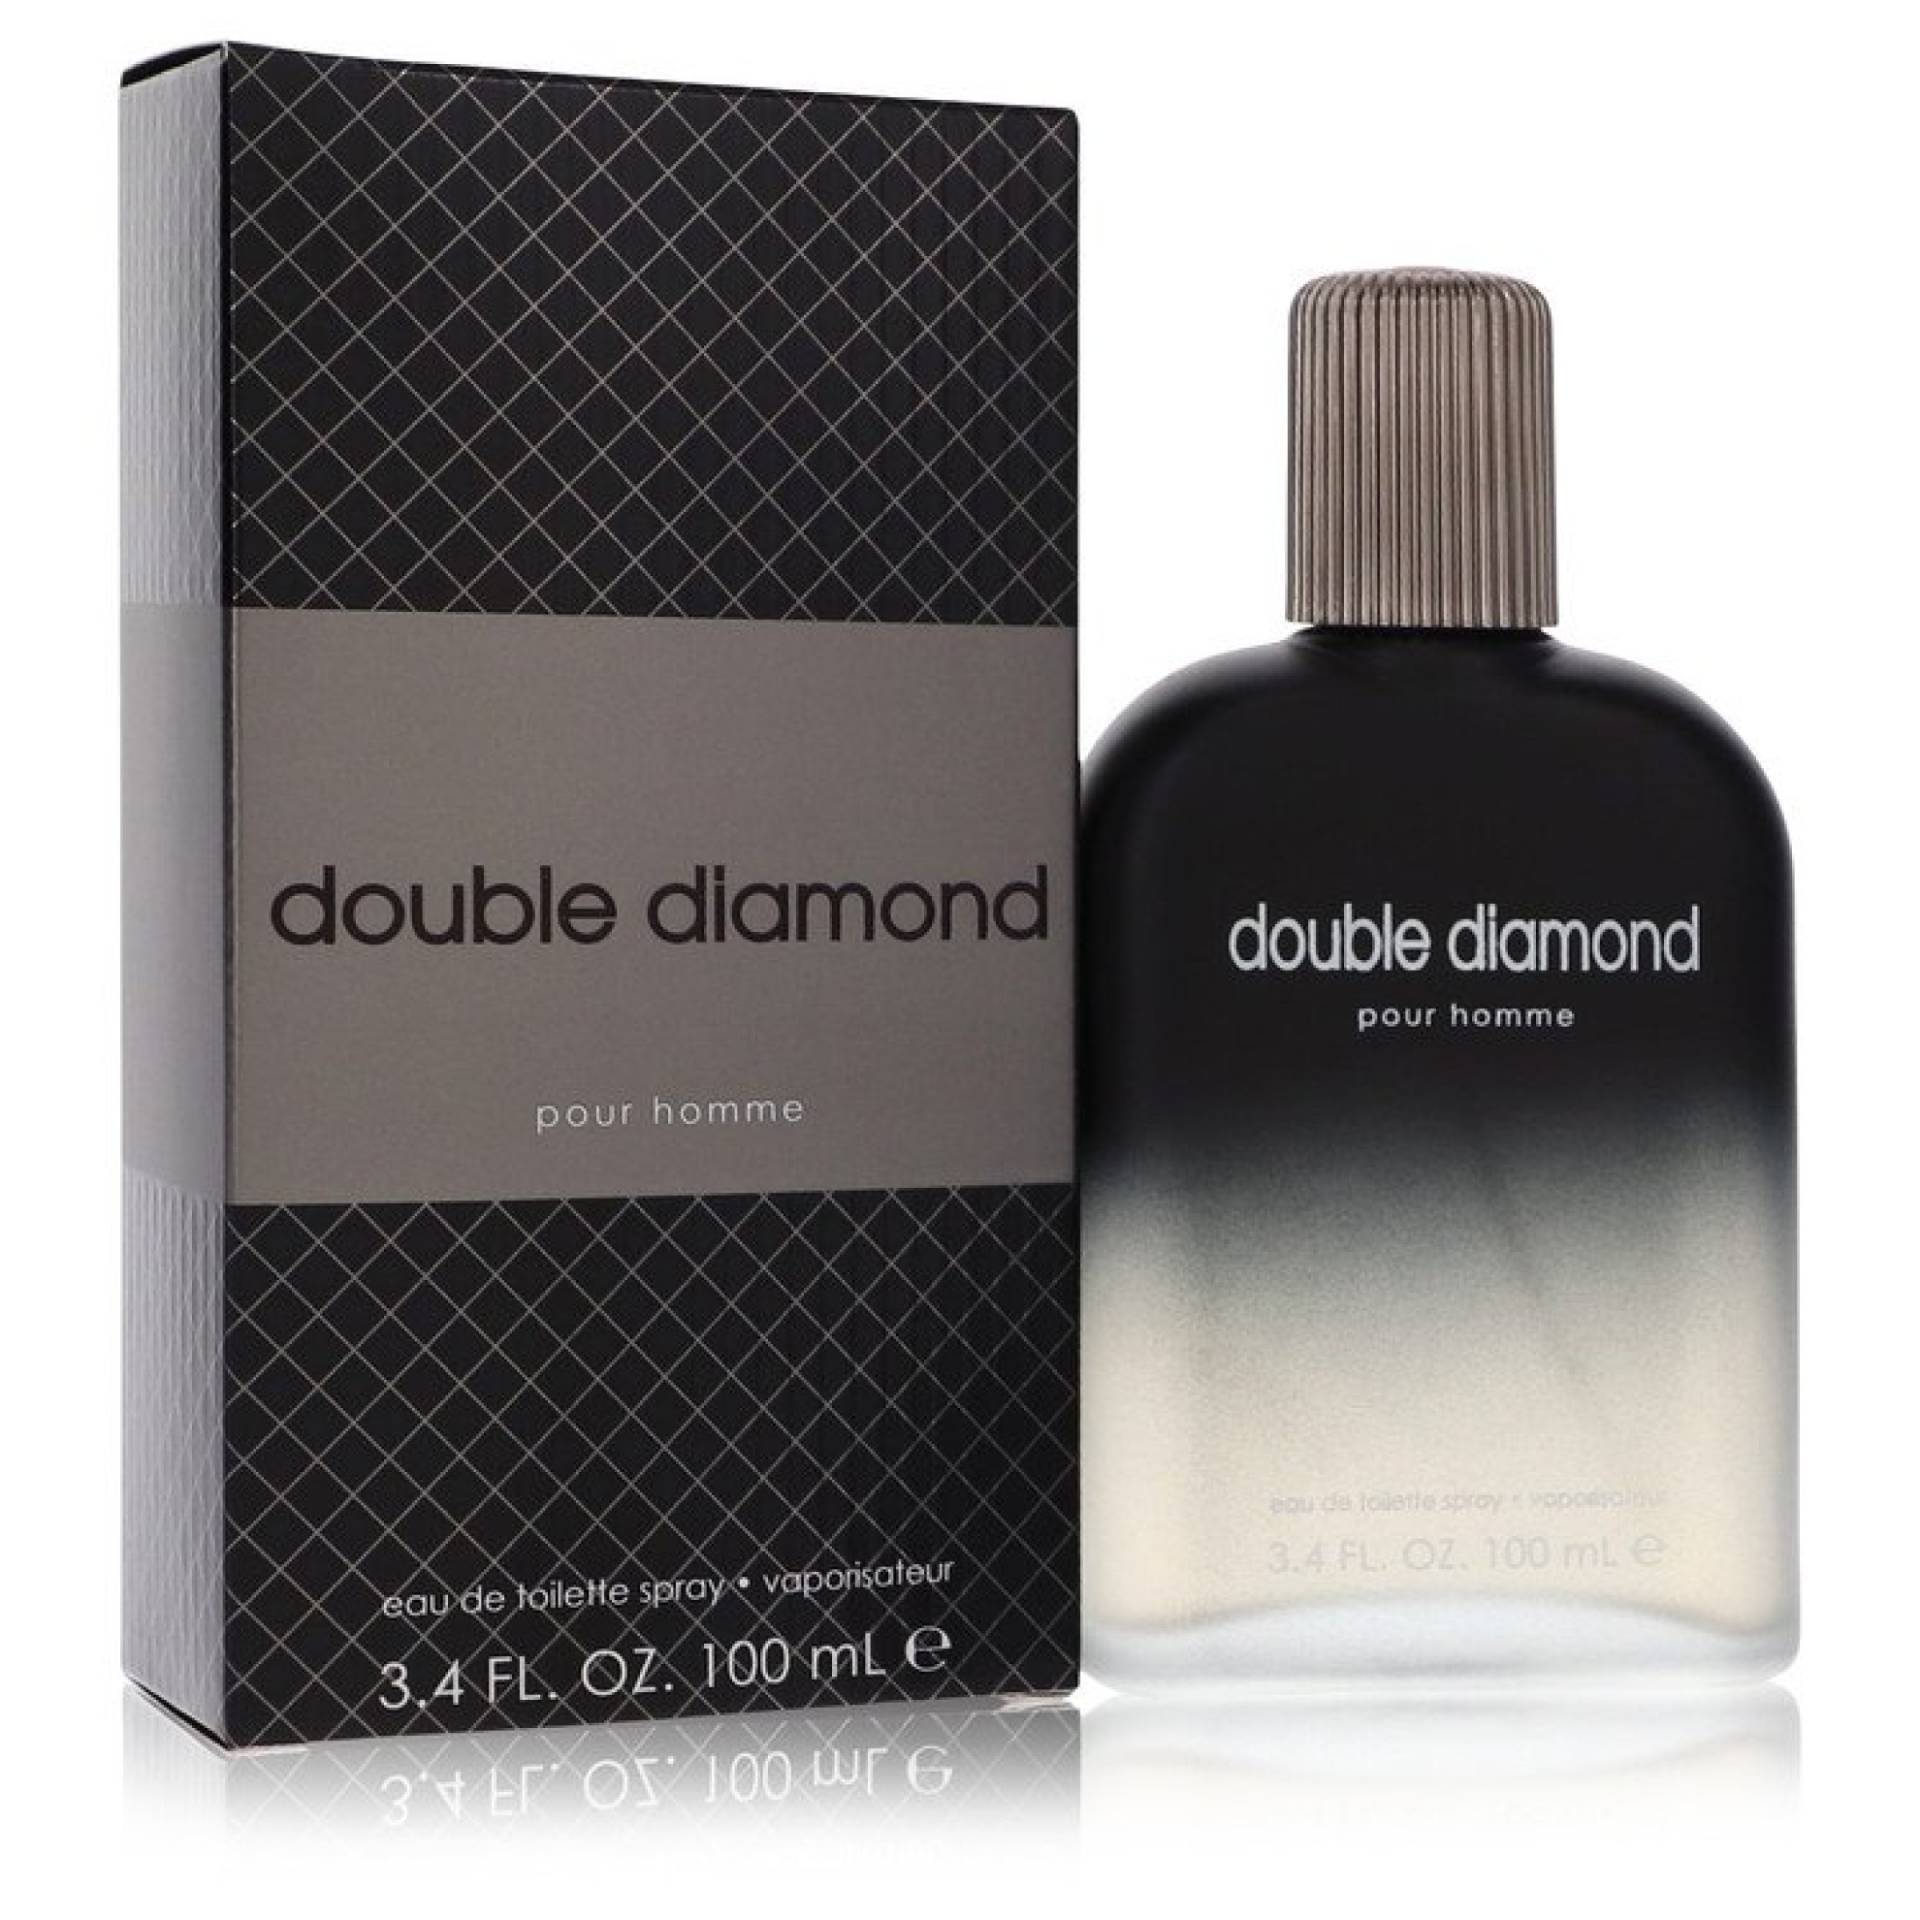 Yzy Perfume Double Diamond Eau De Toilette Spray 100 ml von YZY Perfume